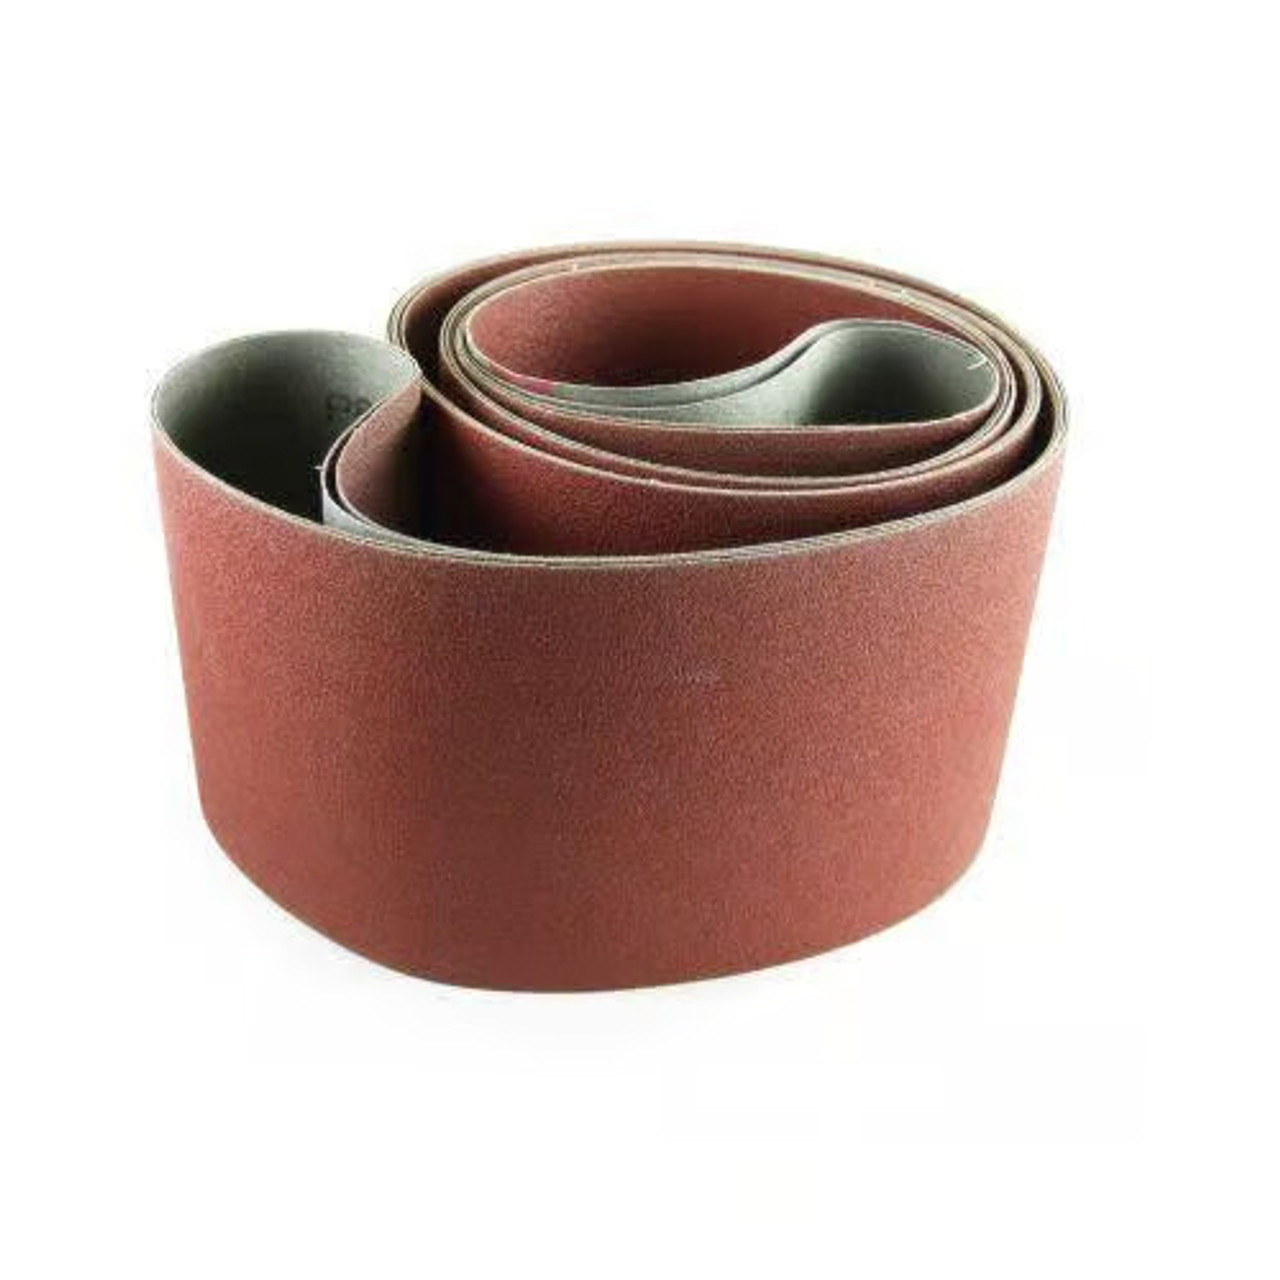 2SAND 4 x 21 3/4 Aluminum Oxide Sanding Belts, 24 - 400 Grit Sandpaper  Belt